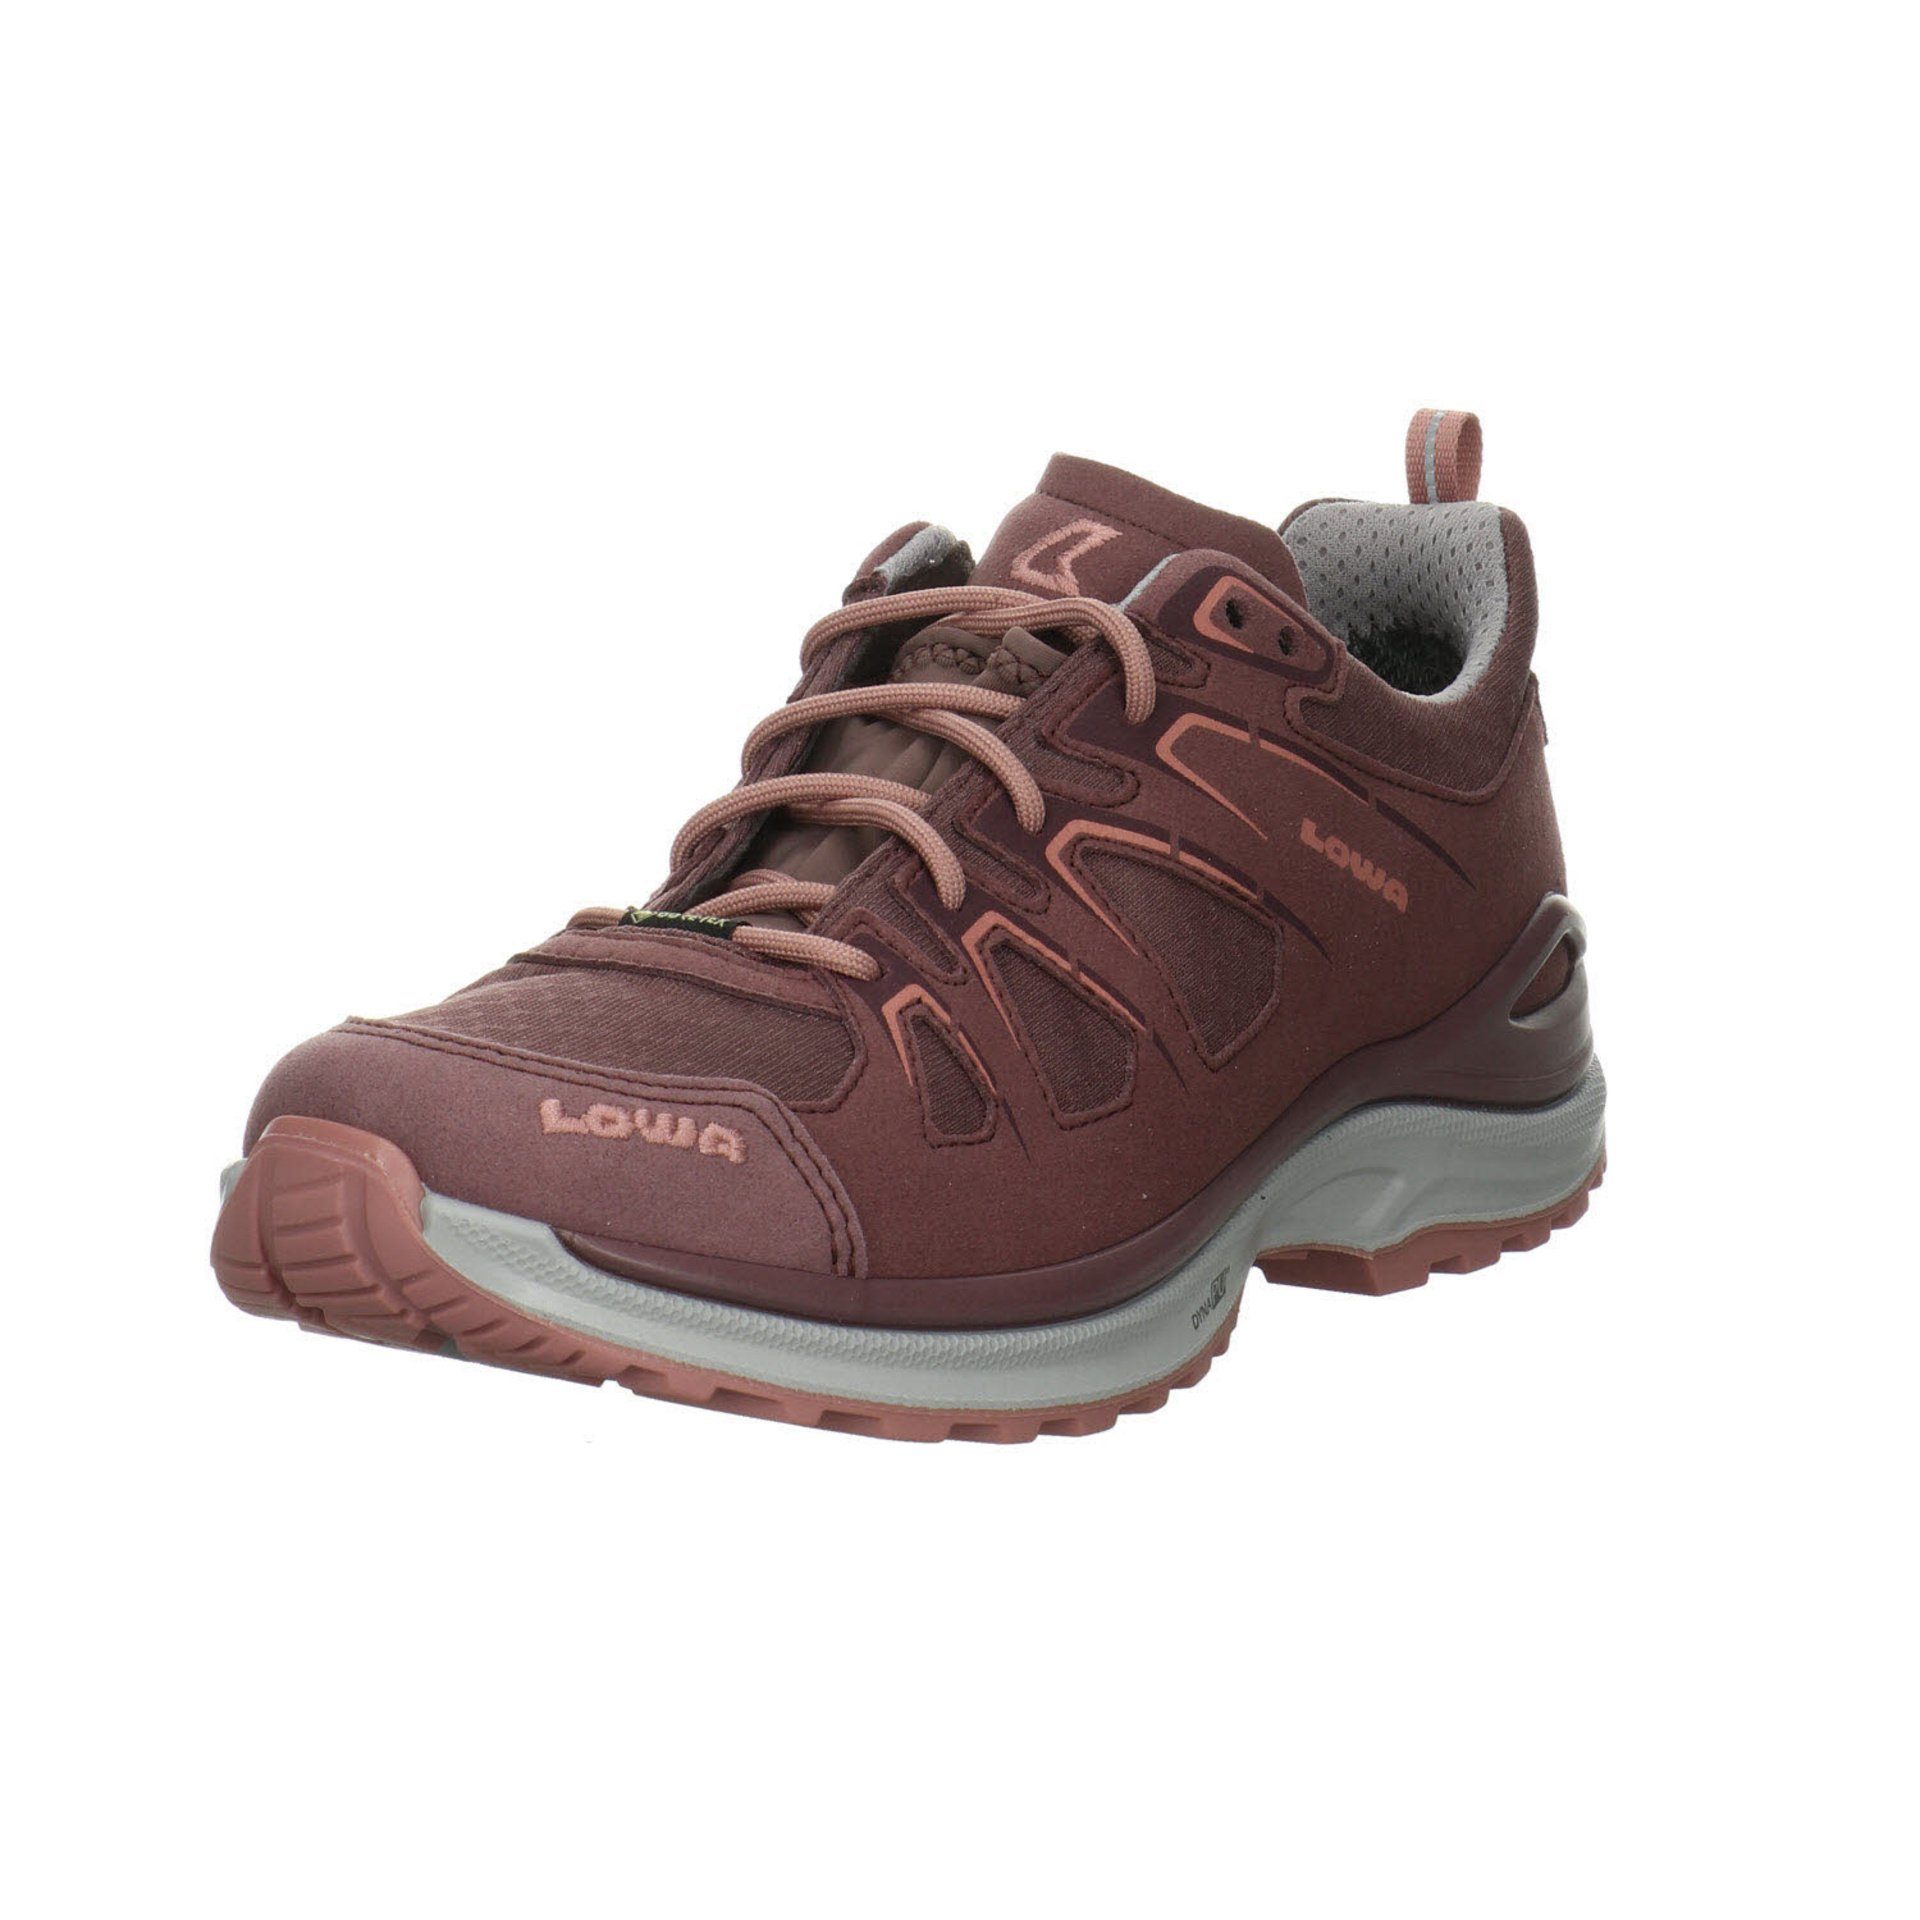 Damen GTX Leder-/Textilkombination Outdoorschuh Evo Lo Outdoorschuh Lowa rot lila + Schuhe sonstige Innox Outdoor